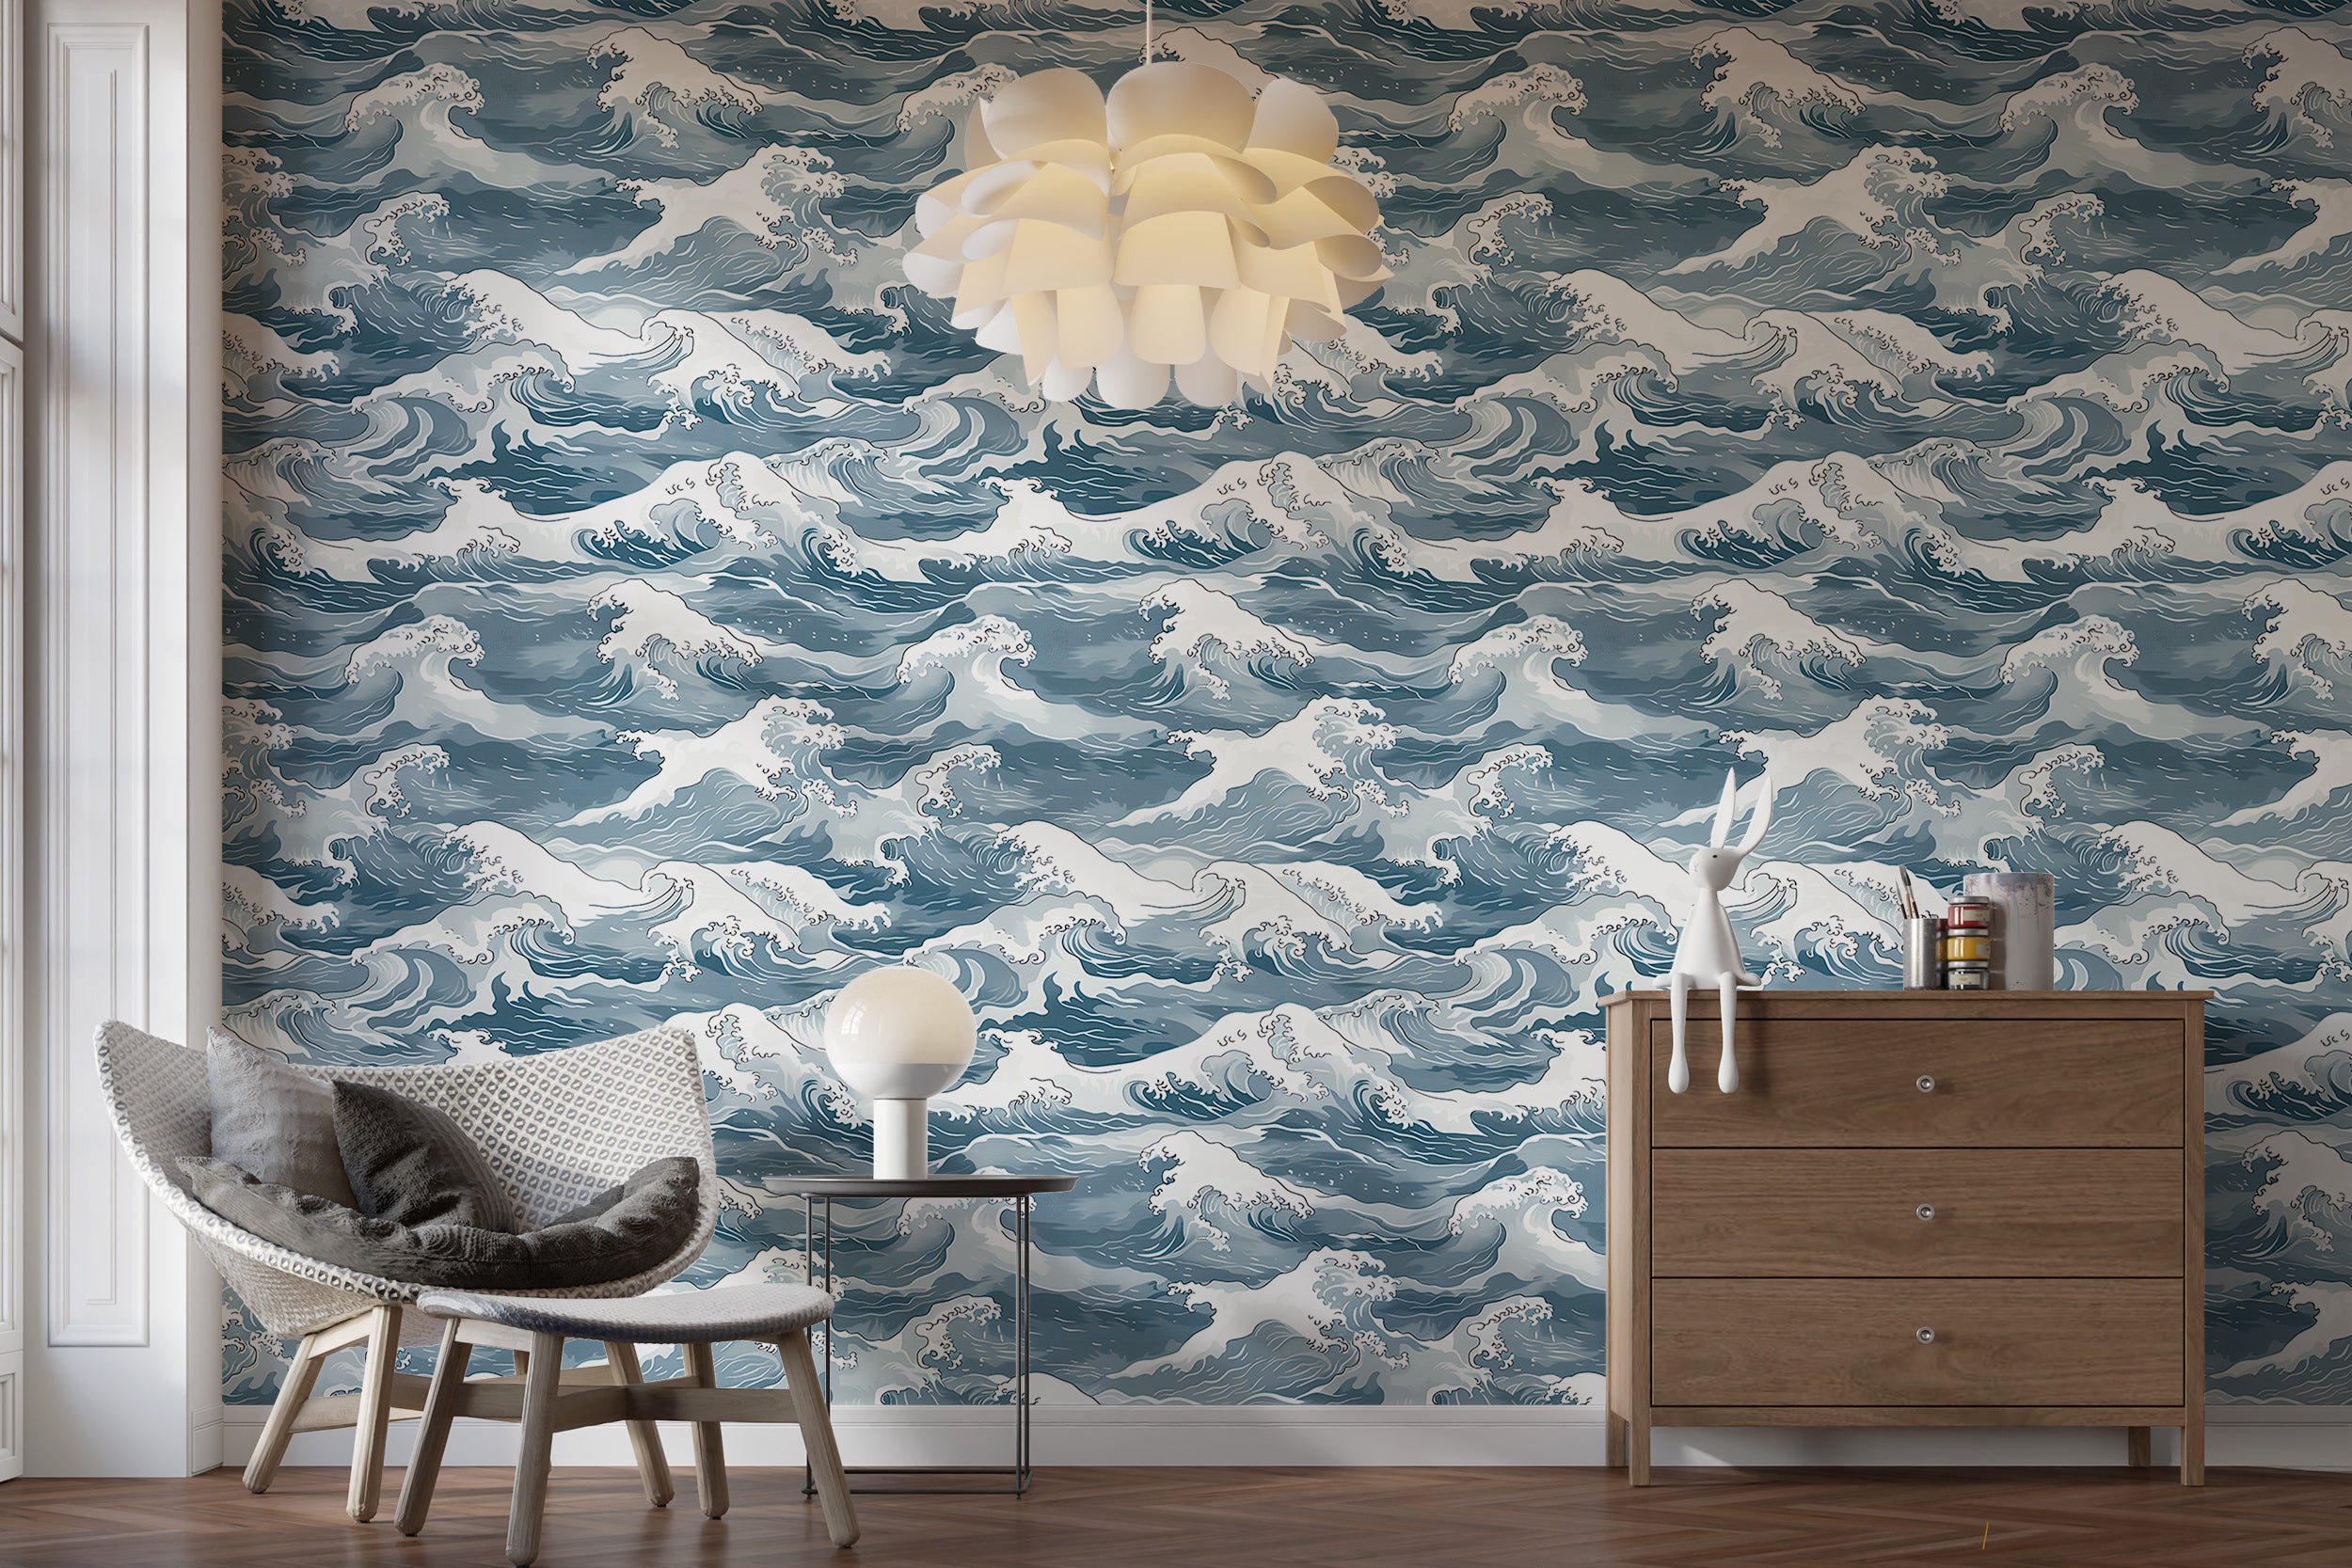 Peel and stick ocean wall decor Watercolor sea waves pattern wallpaper